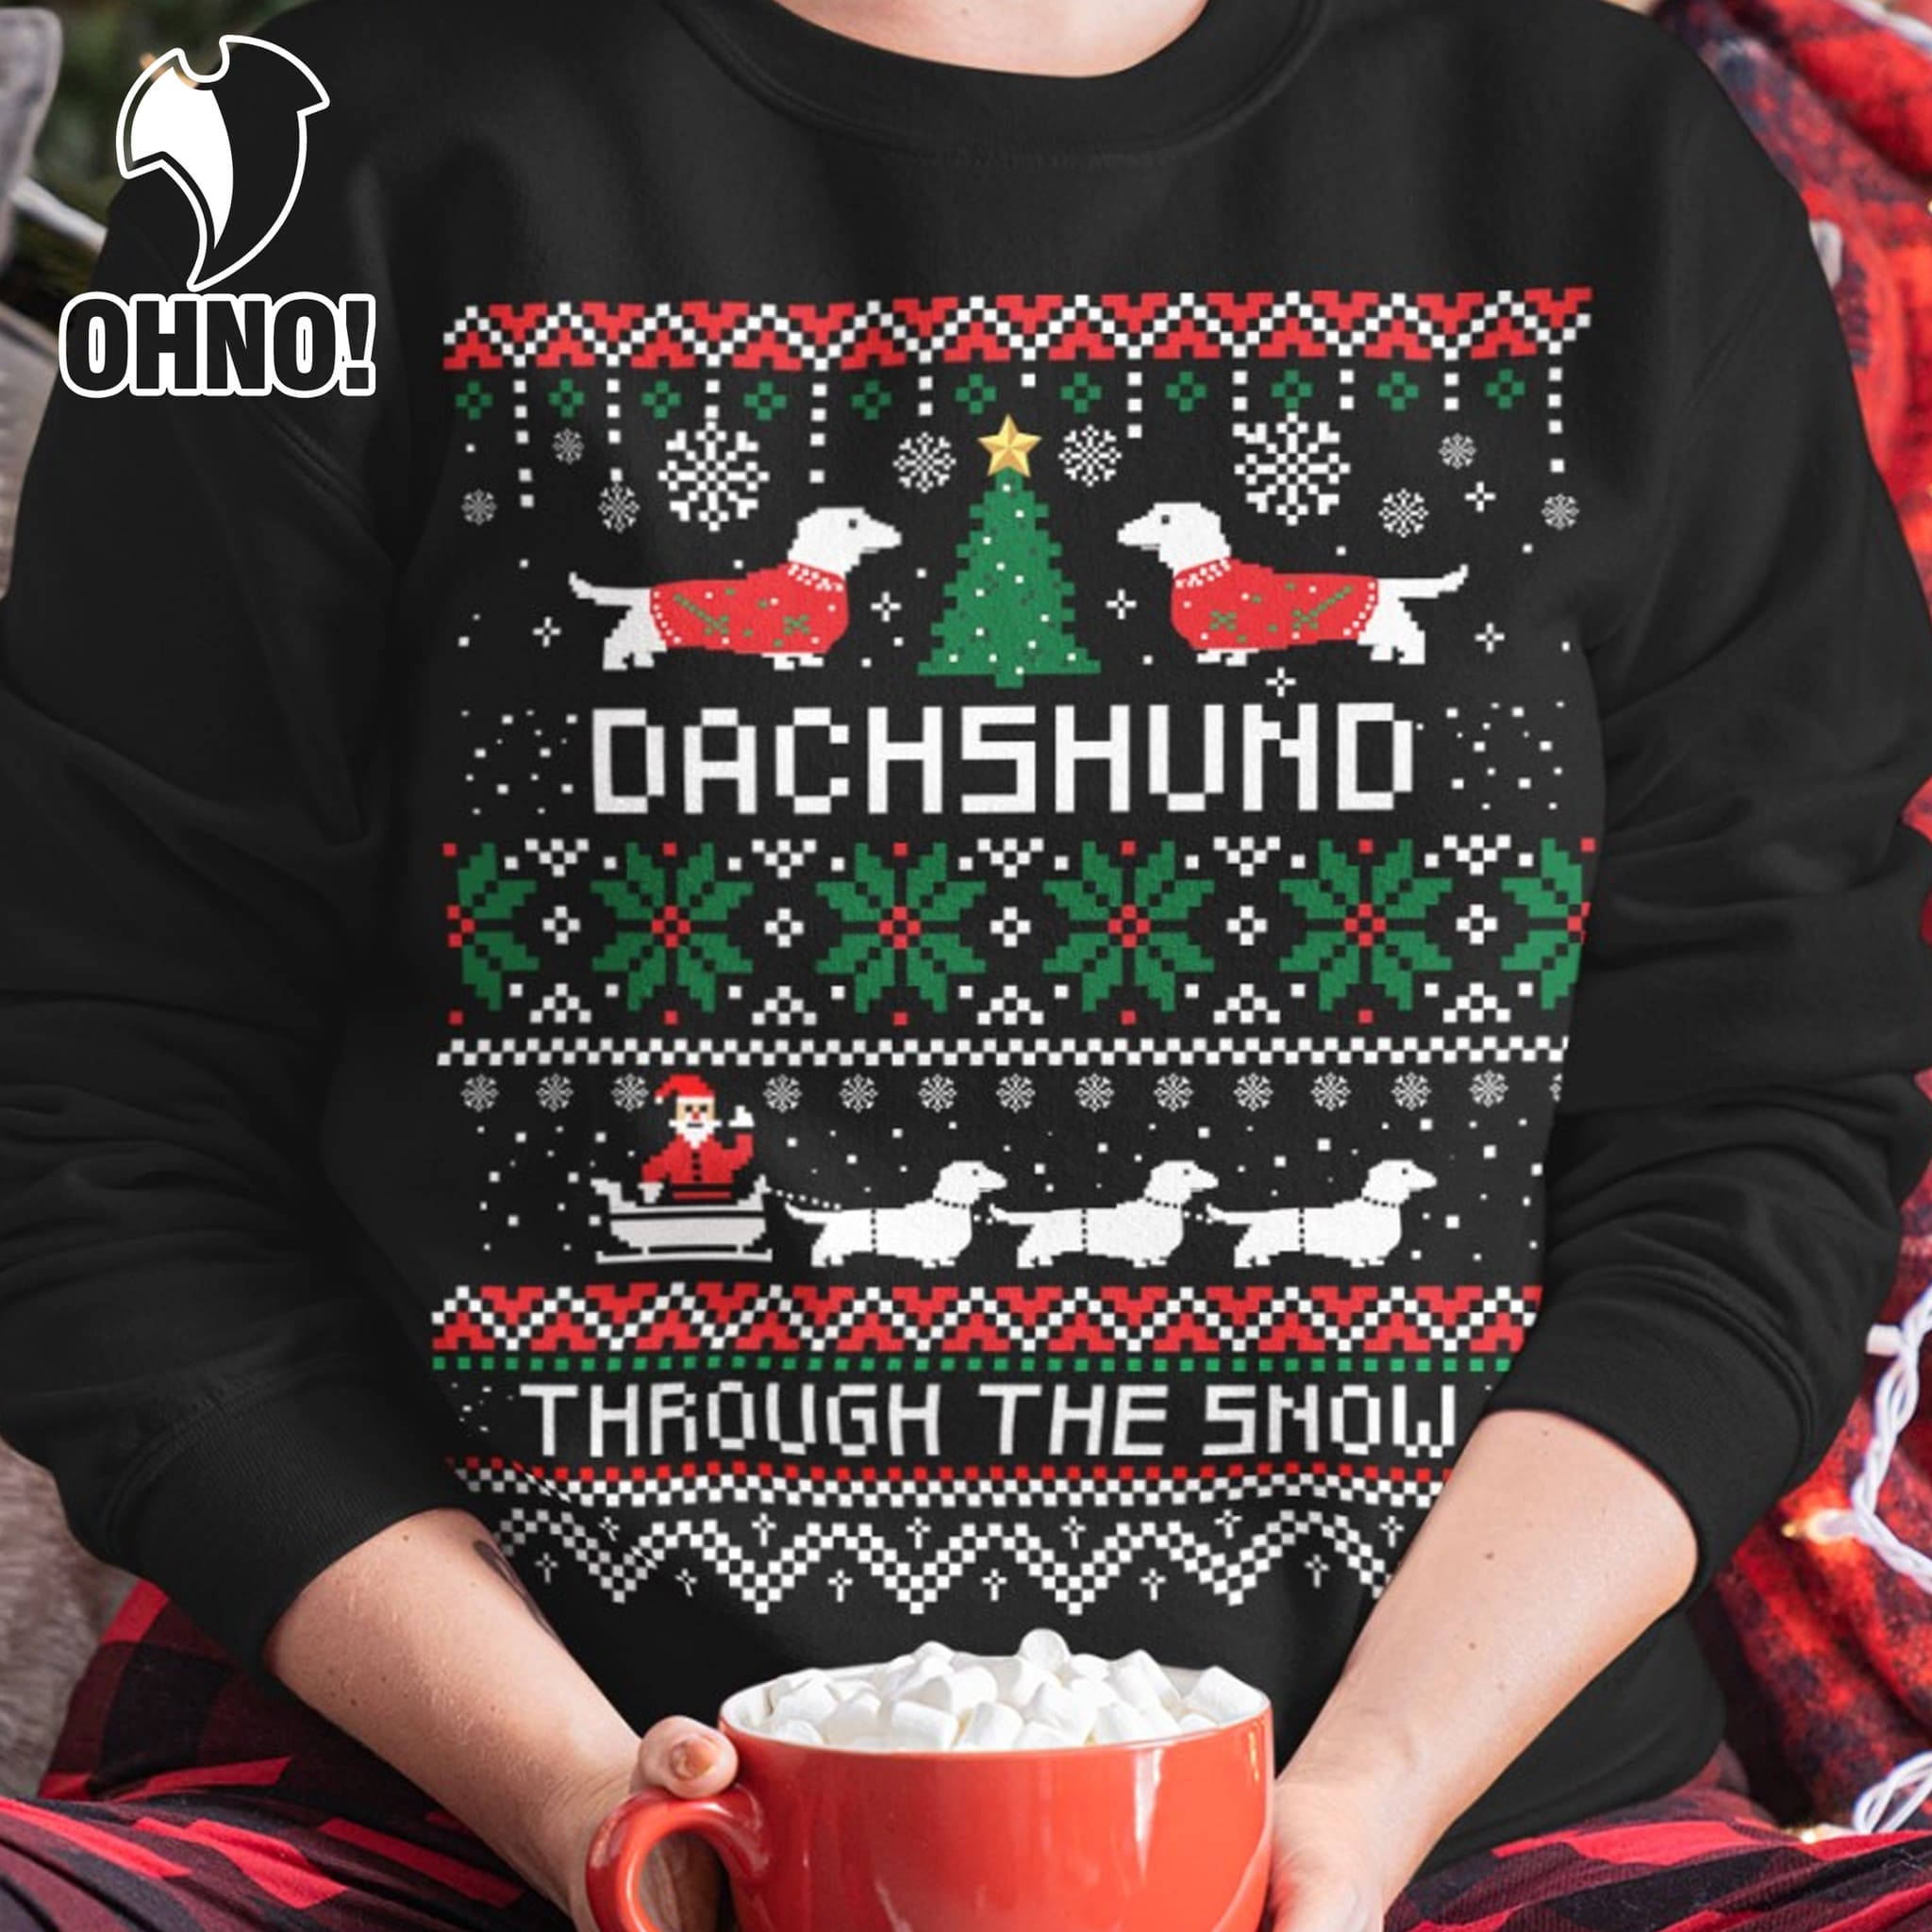 Dachshund through the snow - Christmas ugly sweater, Santa Claus sleigh